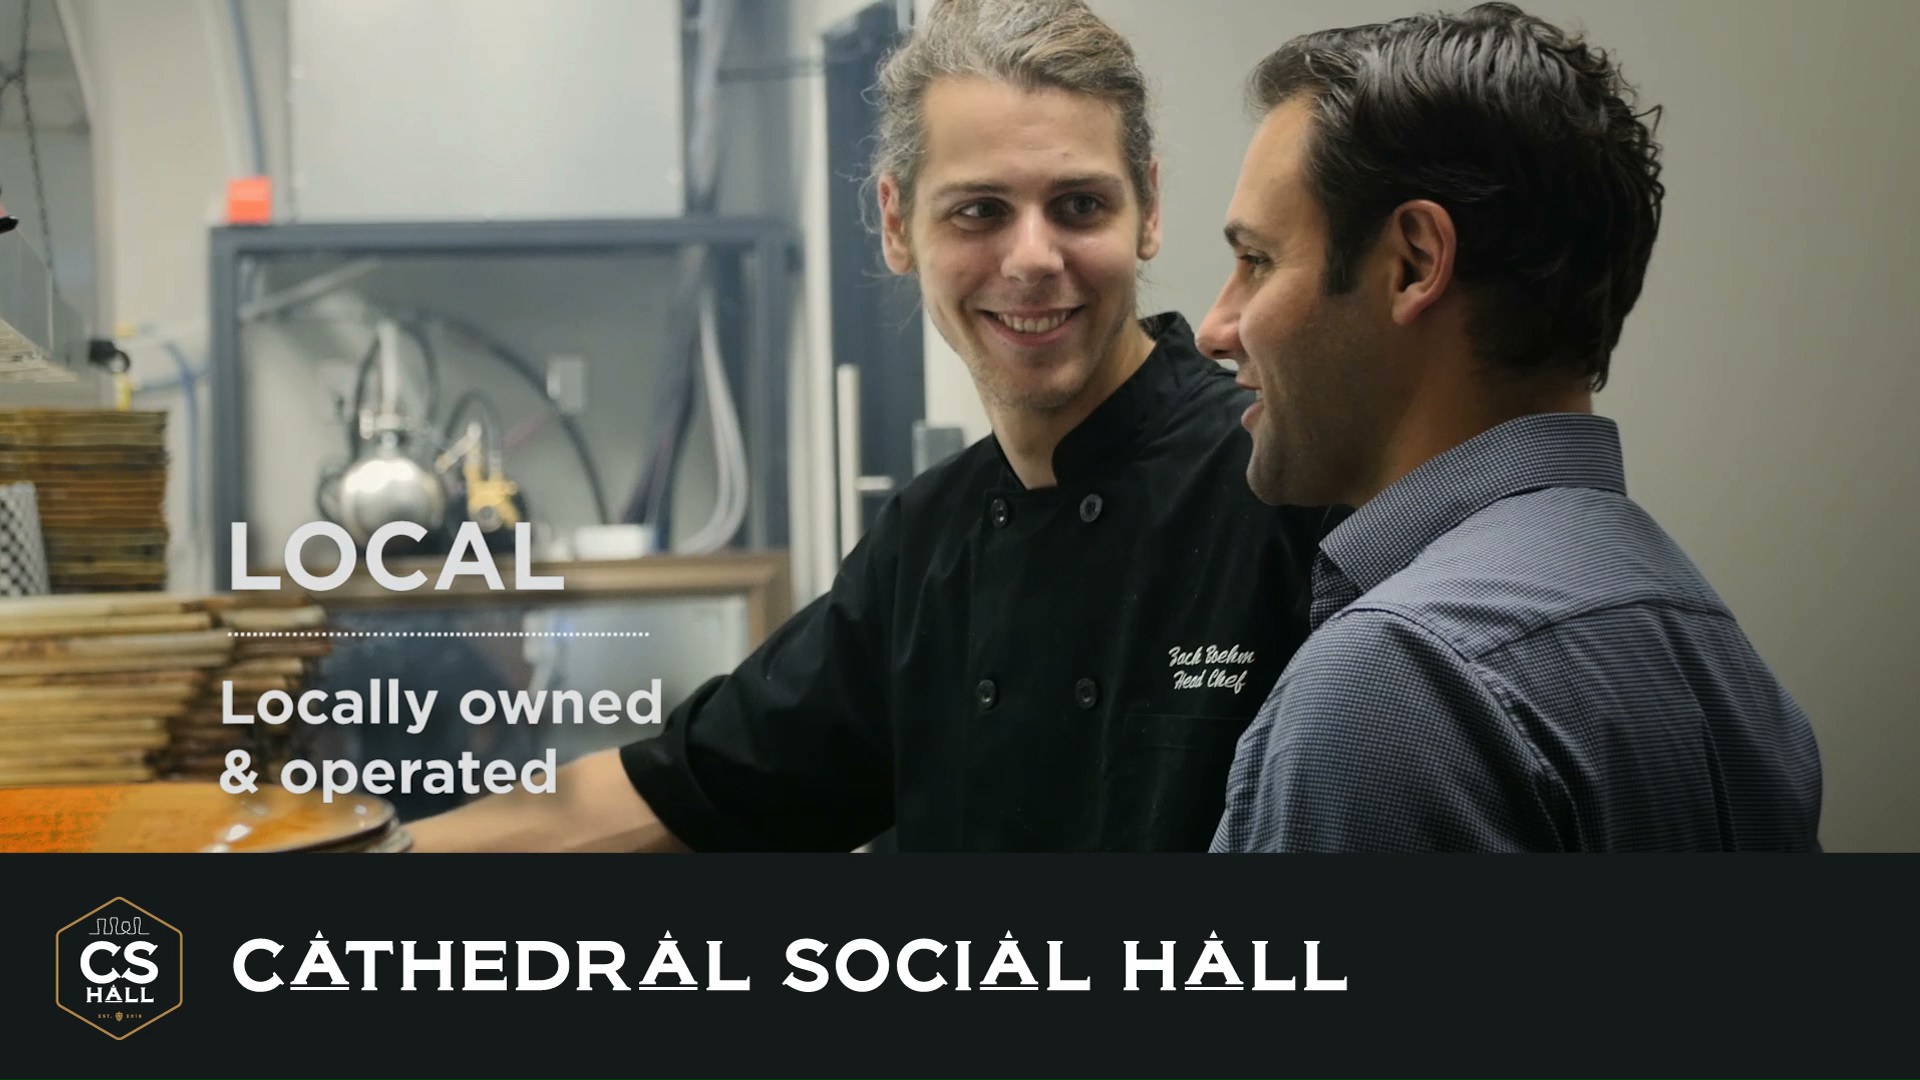 Cathedral Social Hall, Social, Cathedral Social Hall - Team - Matt, Portfolio Image, Locally owned and operated